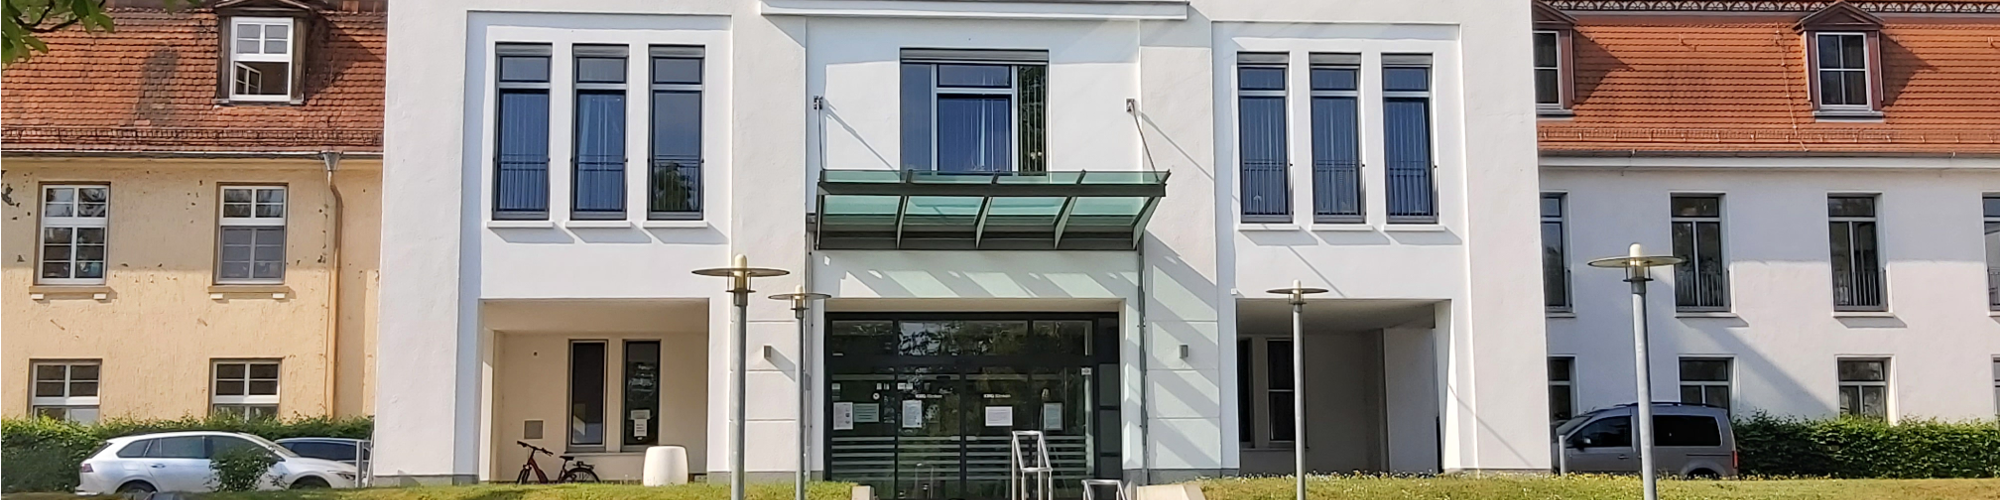 KMG Klinikum Luckenwalde